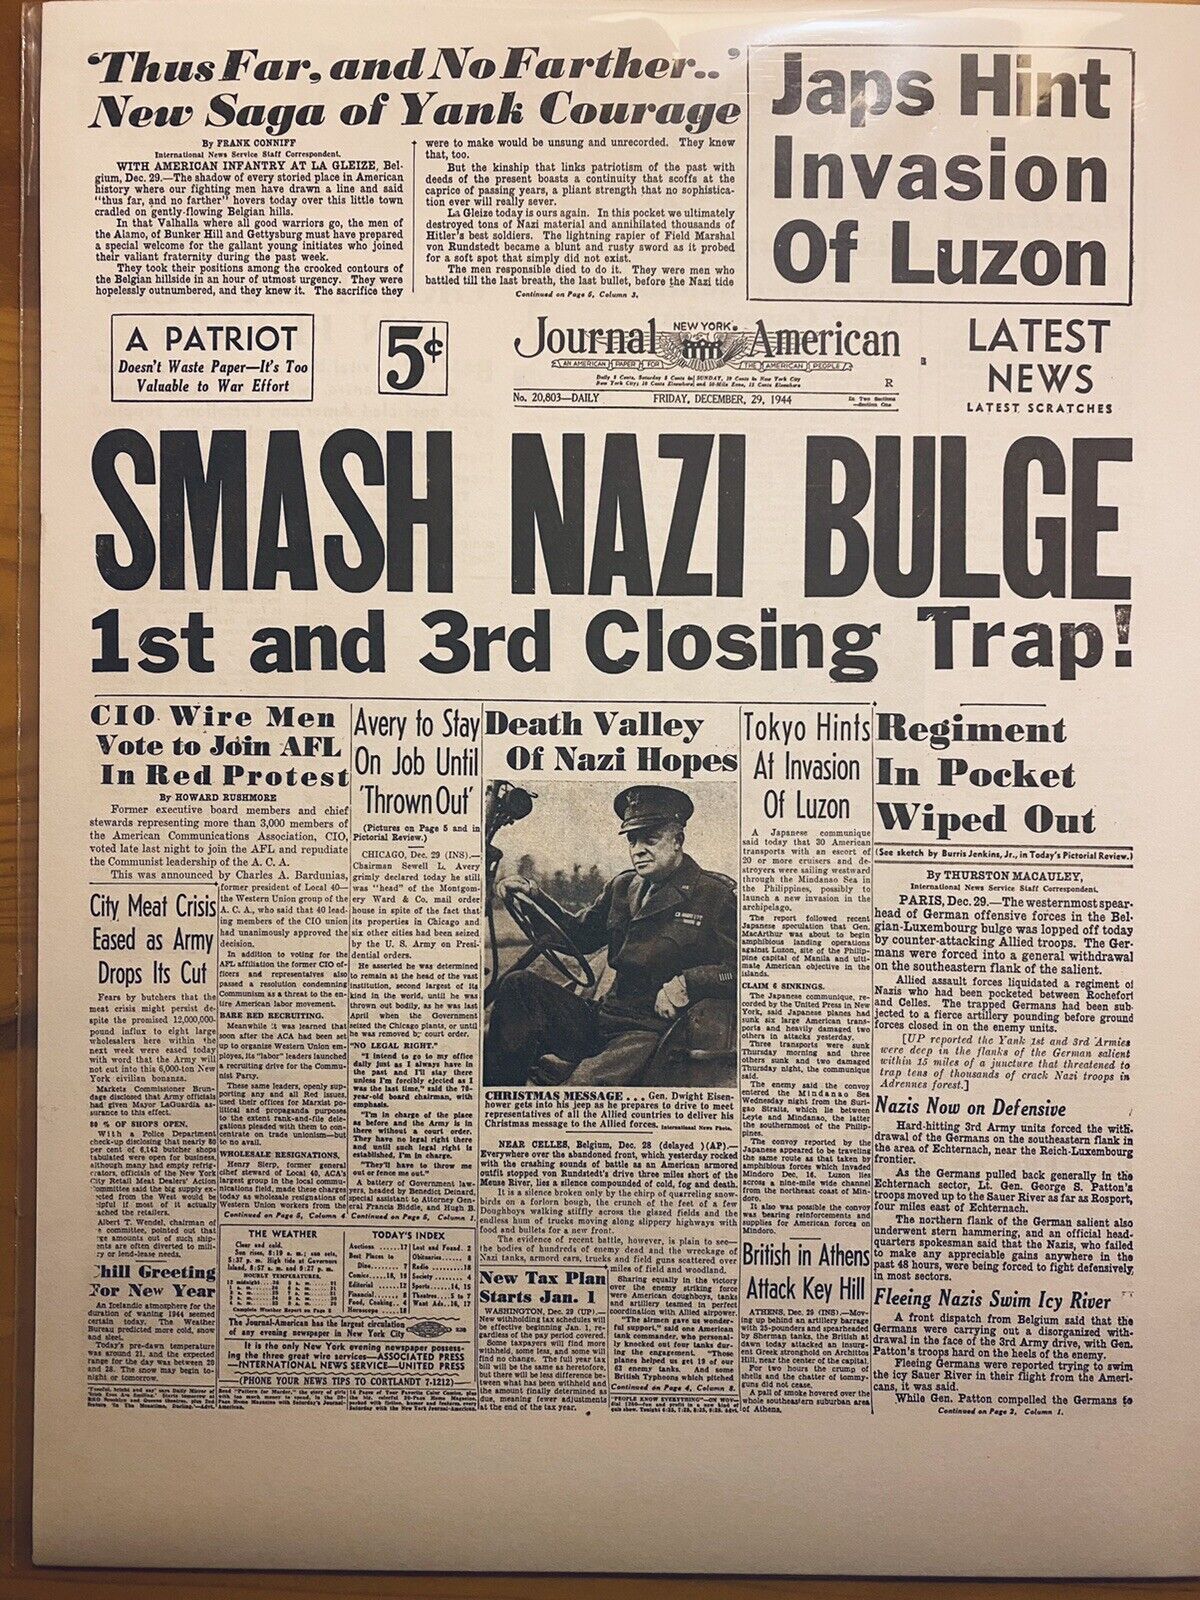 VINTAGE NEWSPAPER HEADLINE ~WORLD WAR 2 BATTLE OF THE BULGE  RETREAT 1944